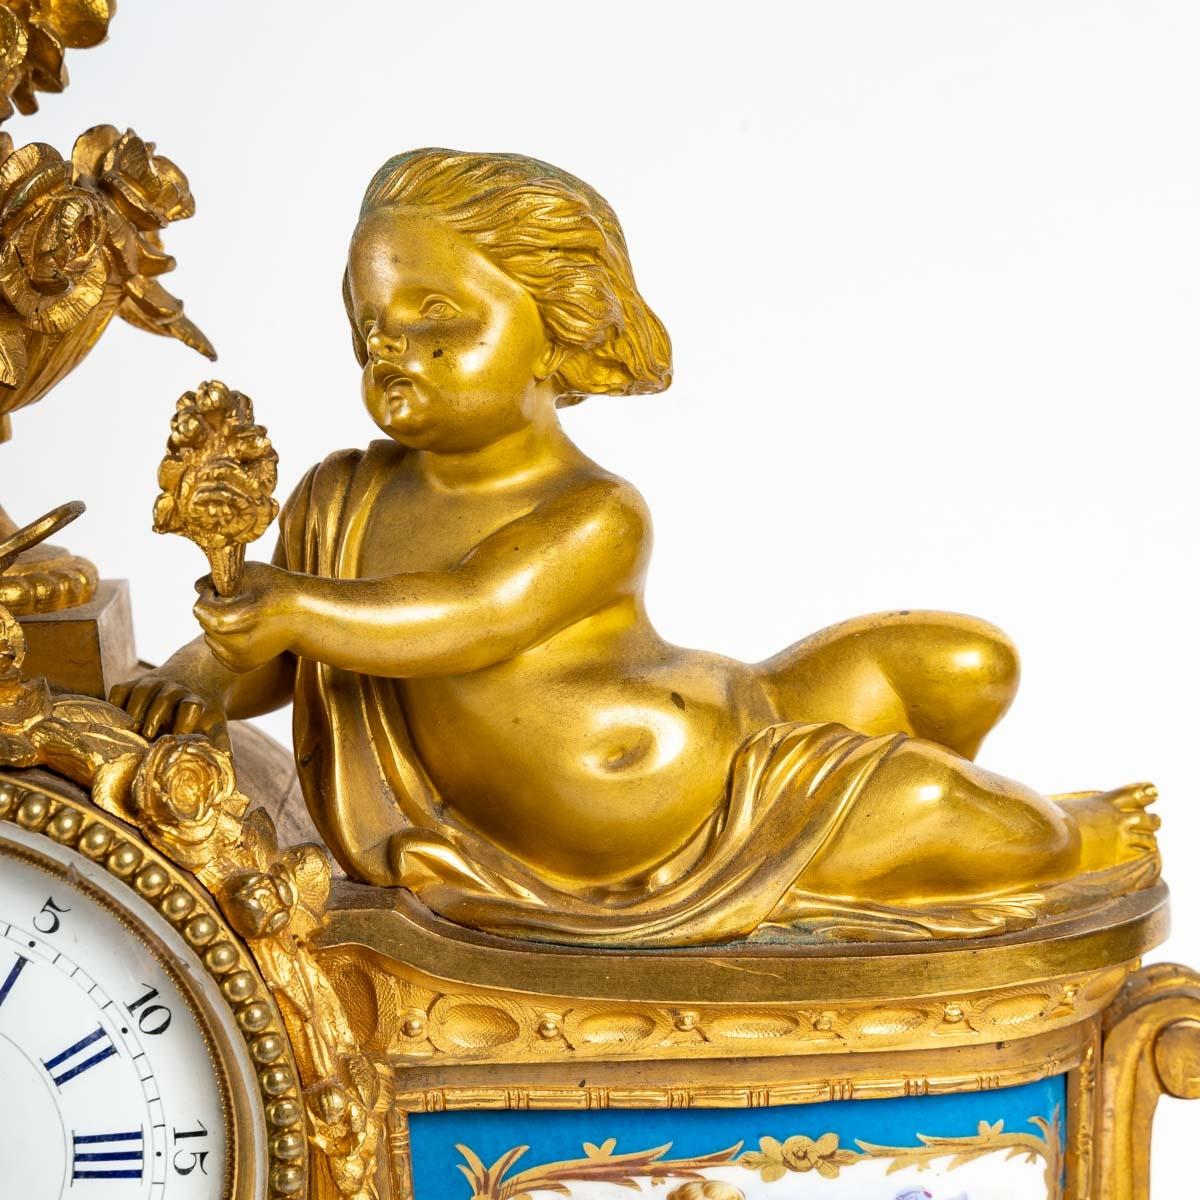 Gilt bronze and porcelain clock, 19th century
Gilt bronze clock and porcelain plate from Sevres, 19th century.
Perfect condition and beautiful decoration
H: 37 cm, W: 49 cm, D: 17 cm
ref 3165